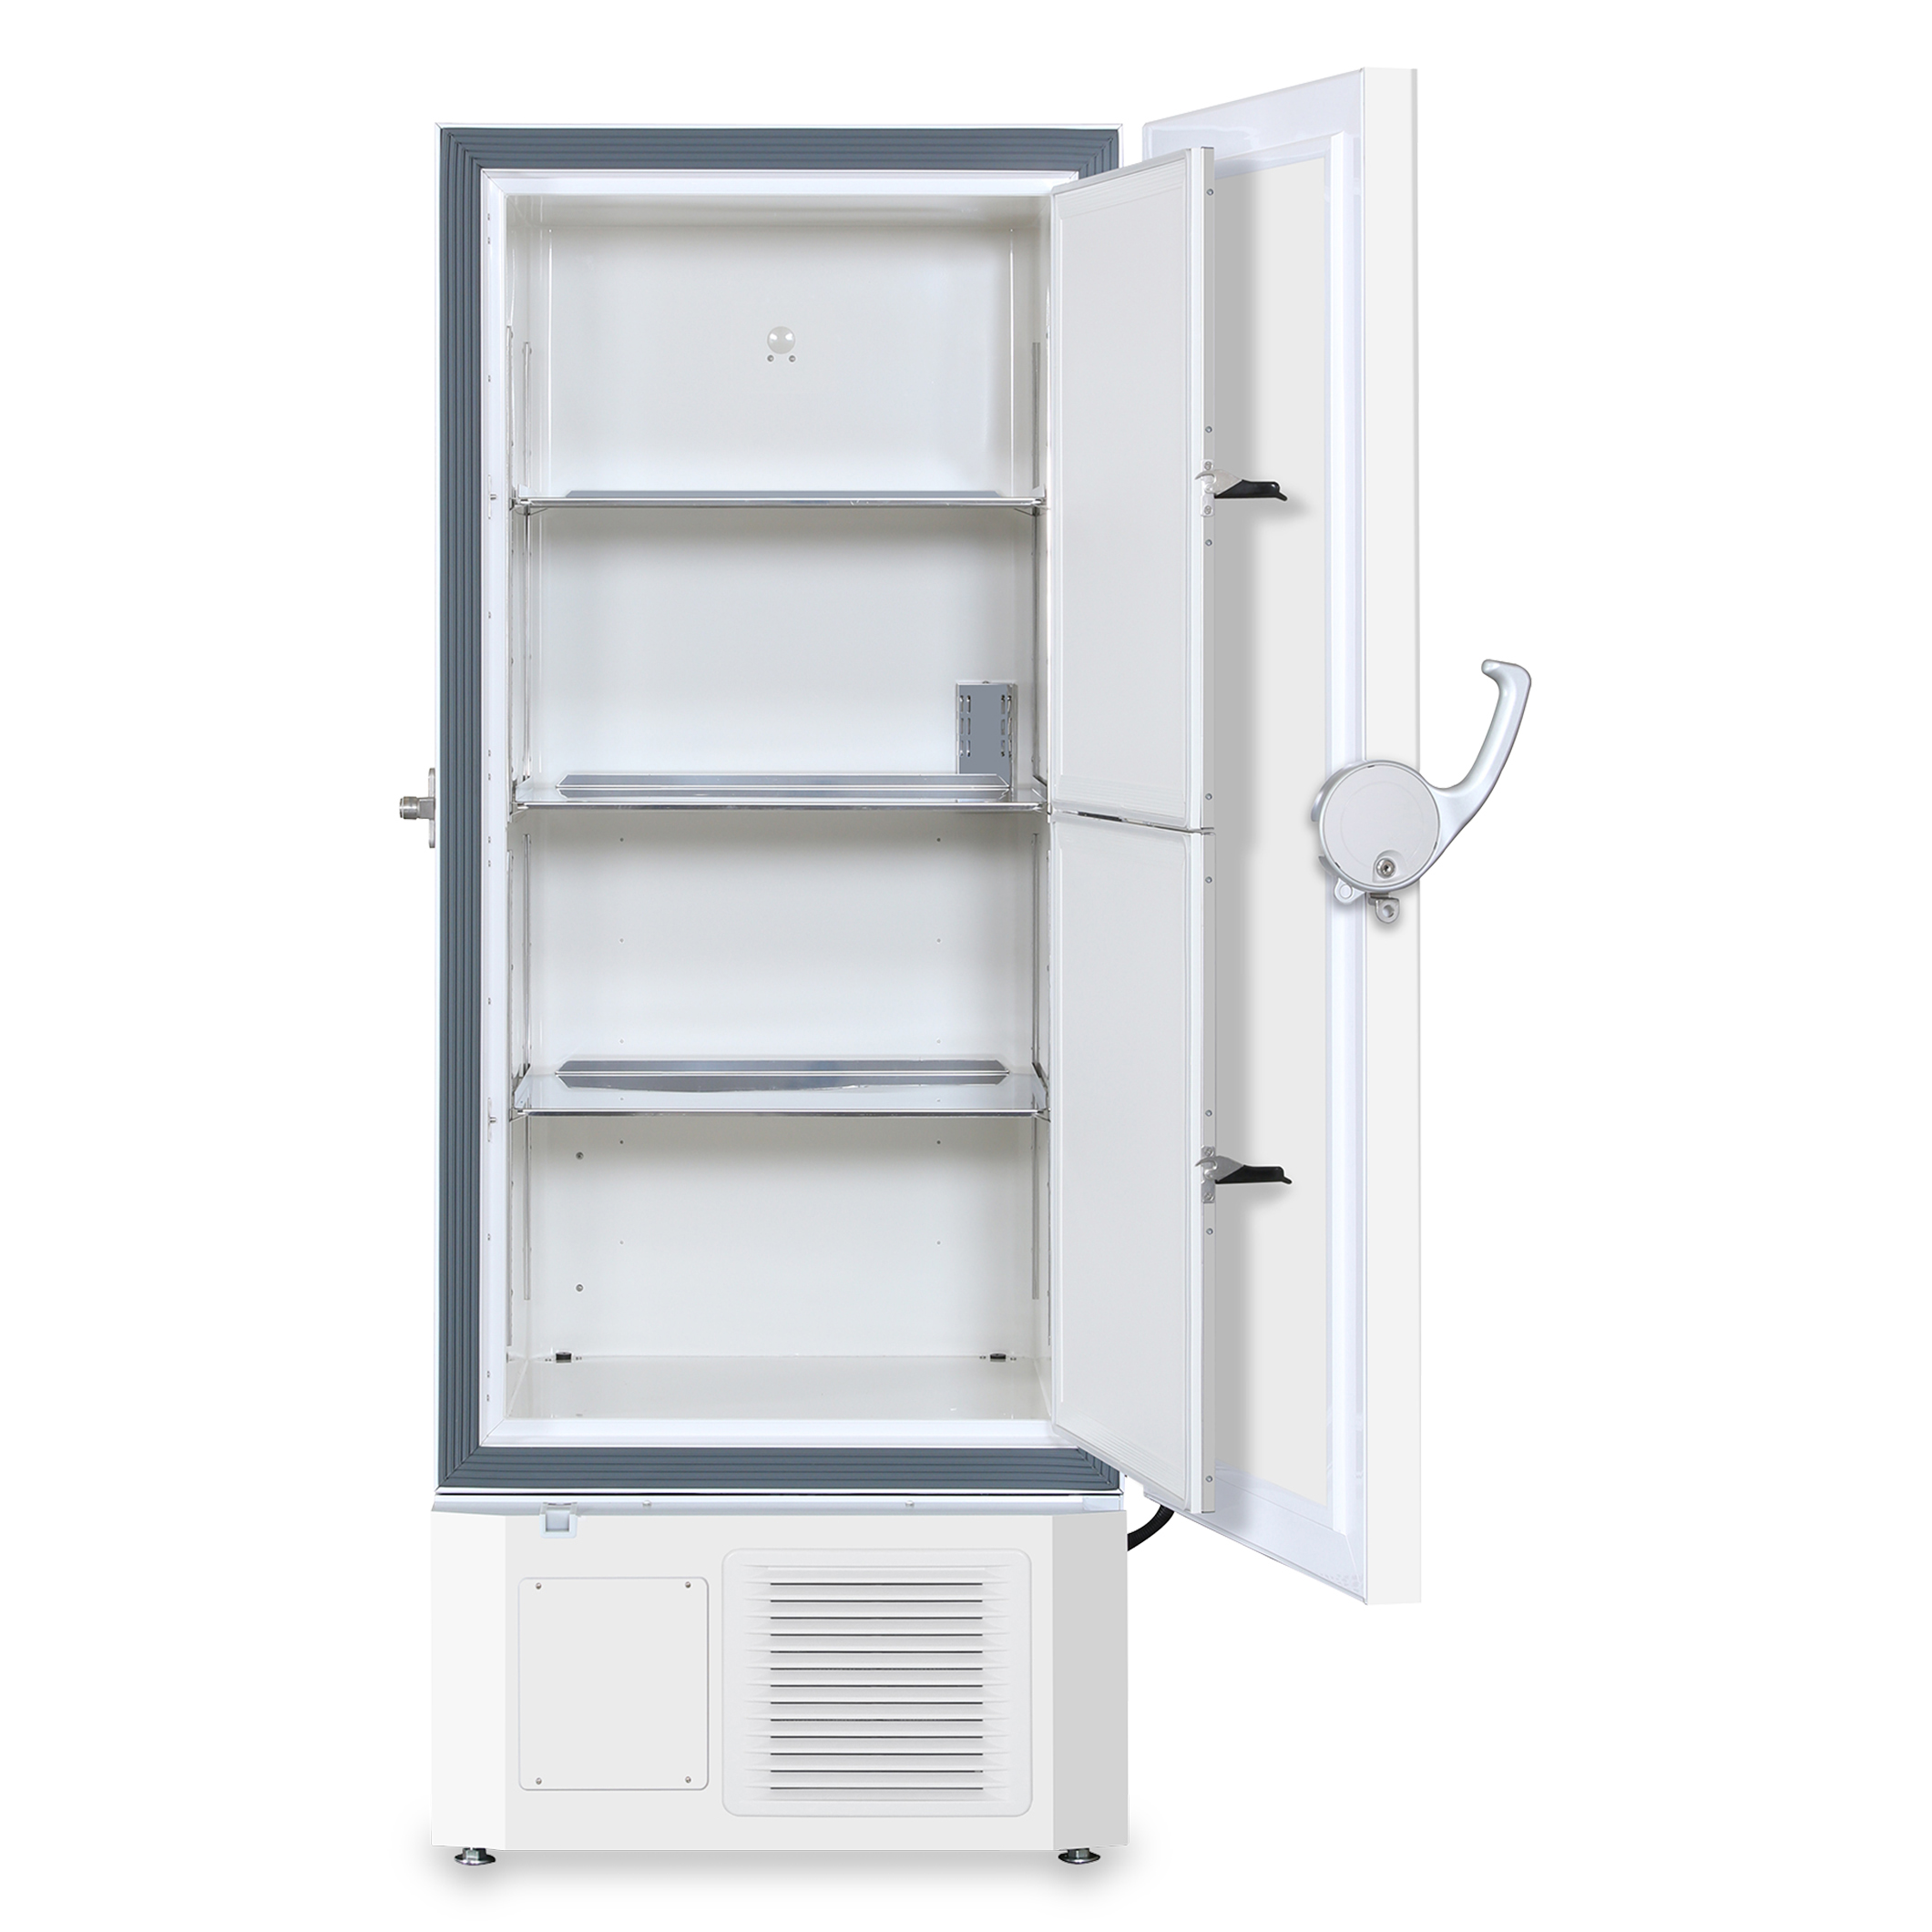 ultra-low temperature freezer MDF-DU302VX